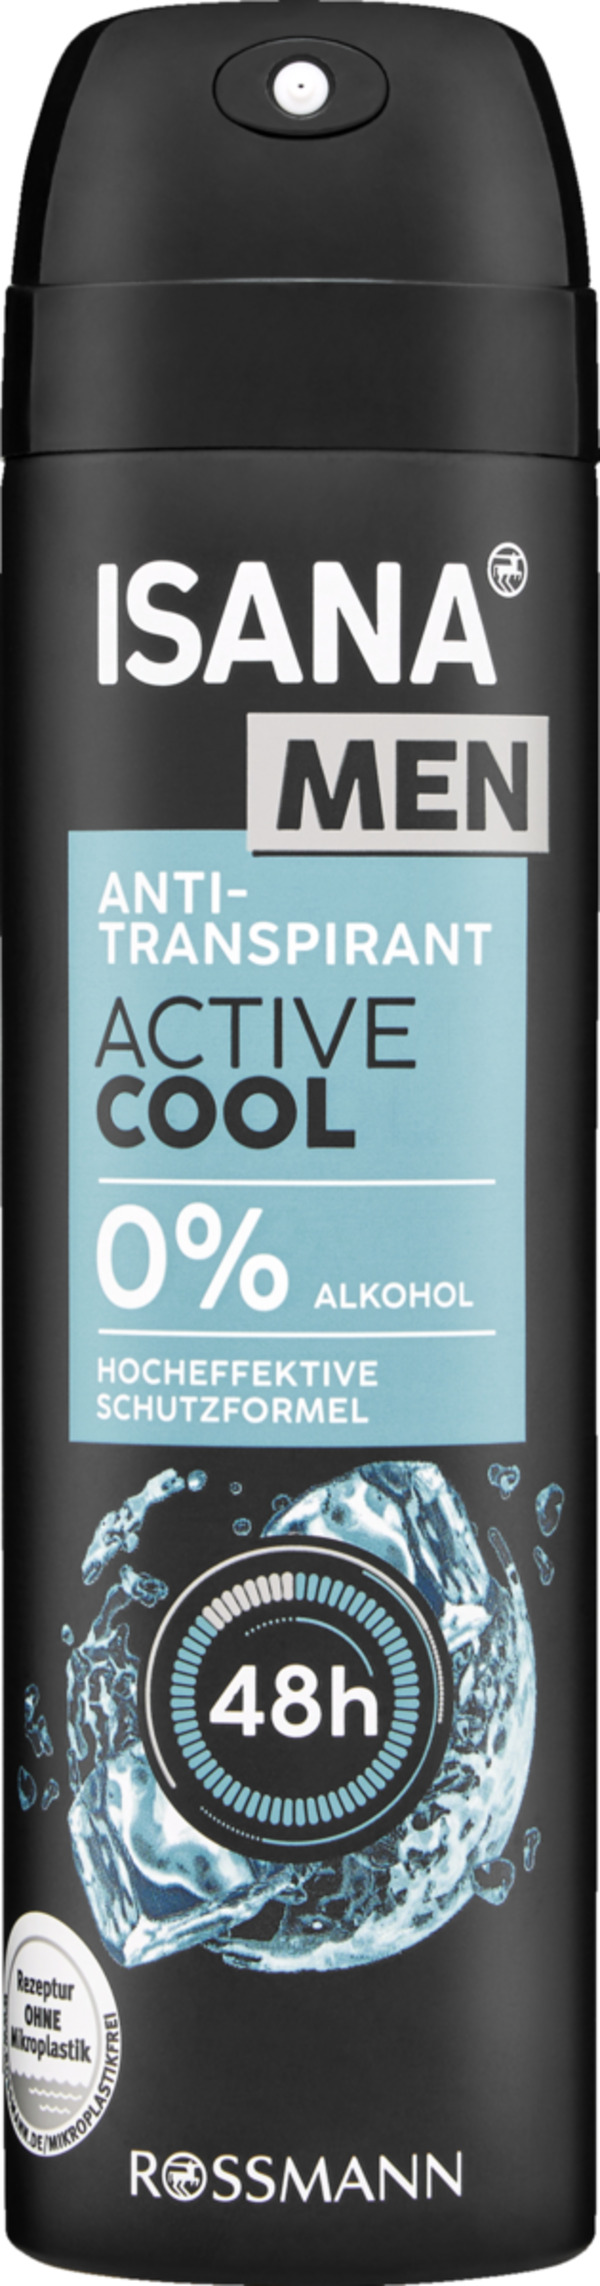 Bild 1 von ISANA men Anti-Transparant Spray Active Cool 0.43 EUR/100 ml